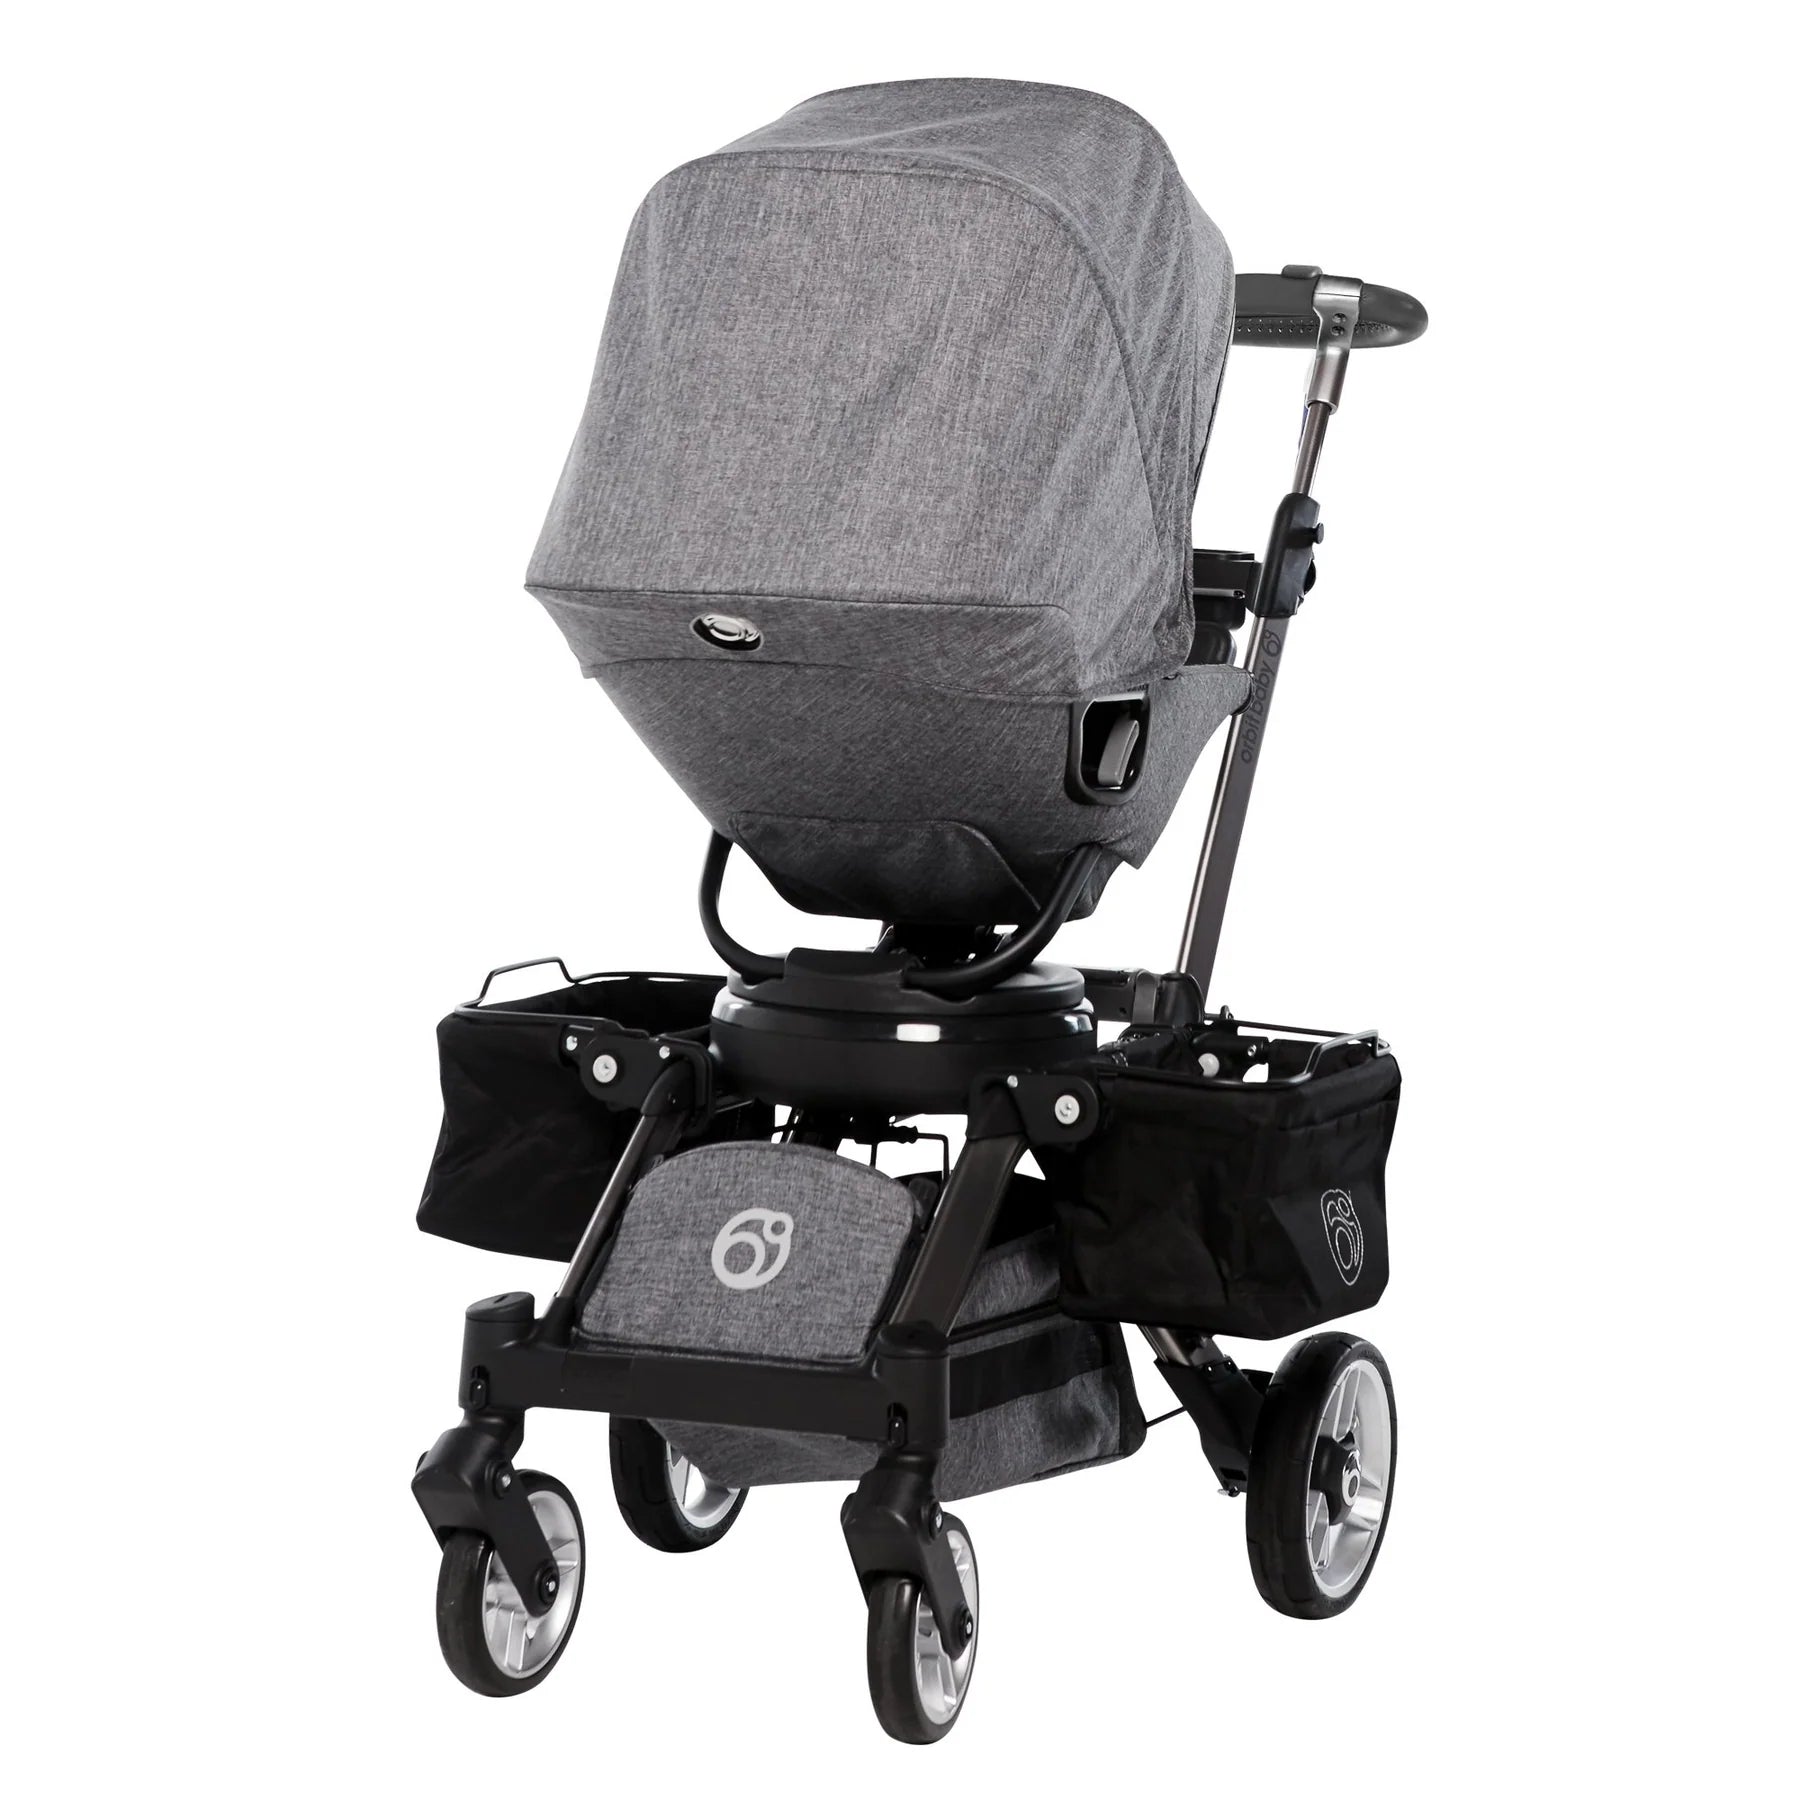 Orbit Baby Pannier Set for Stroller